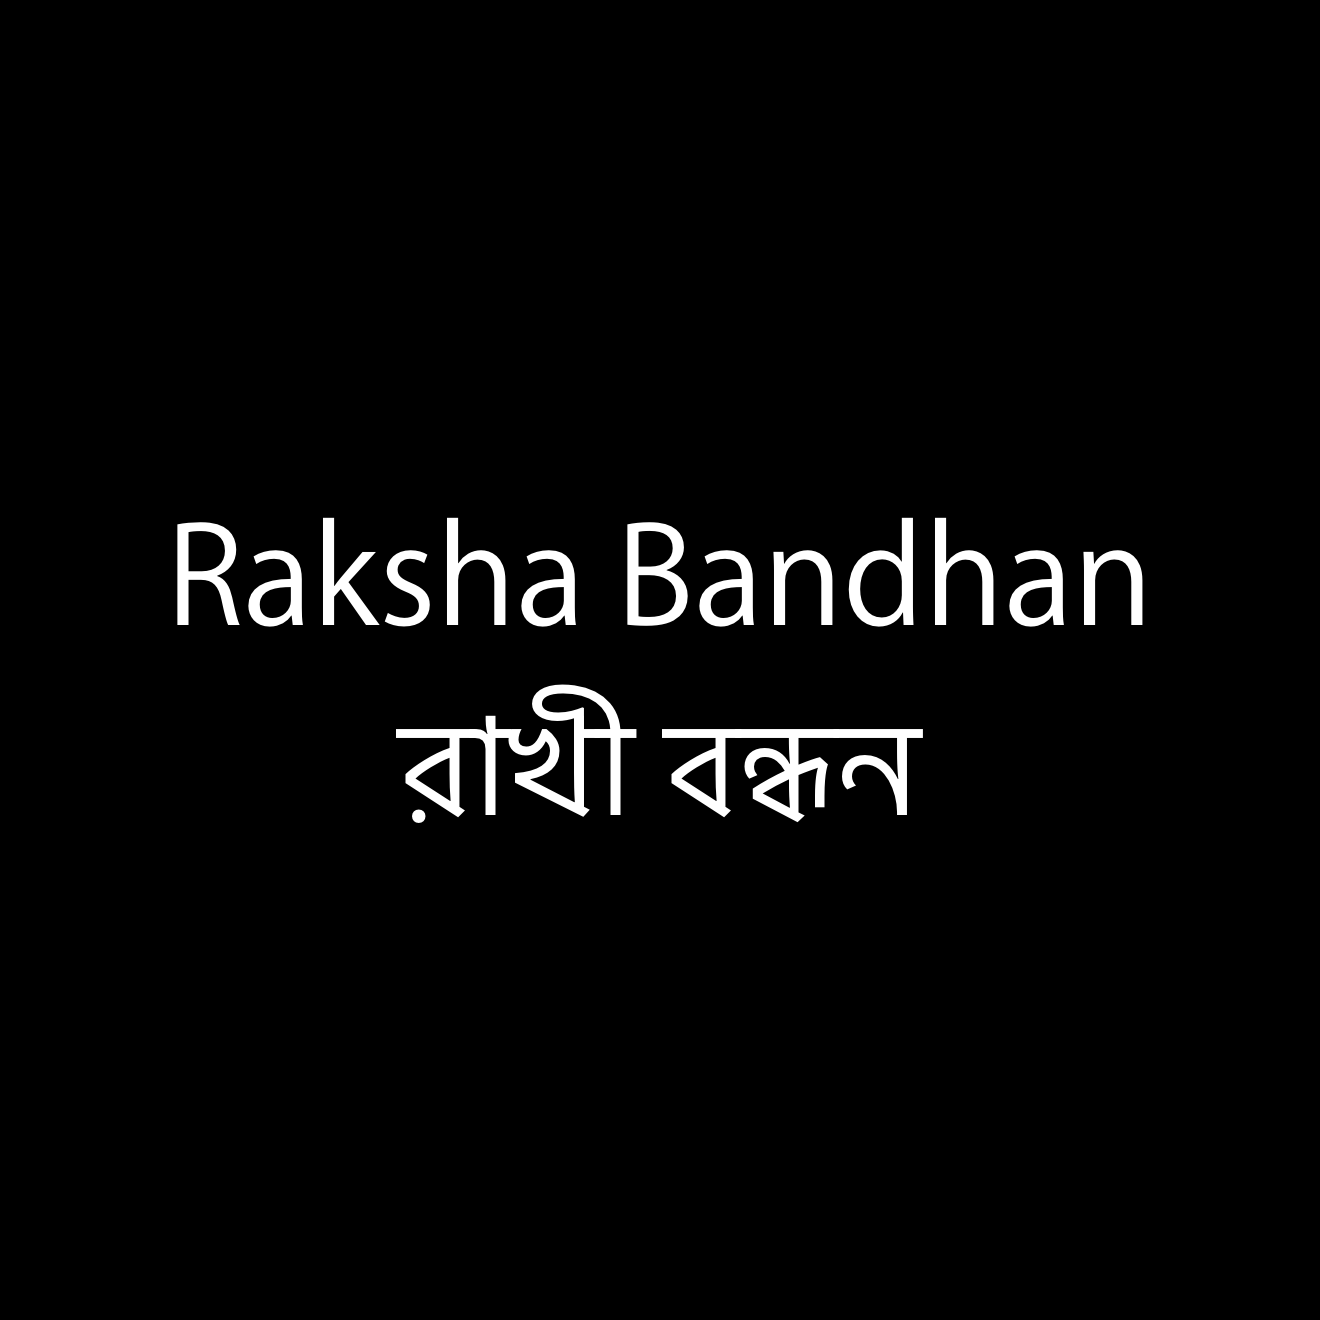 Raksha Bandhan রাখী বন্ধন